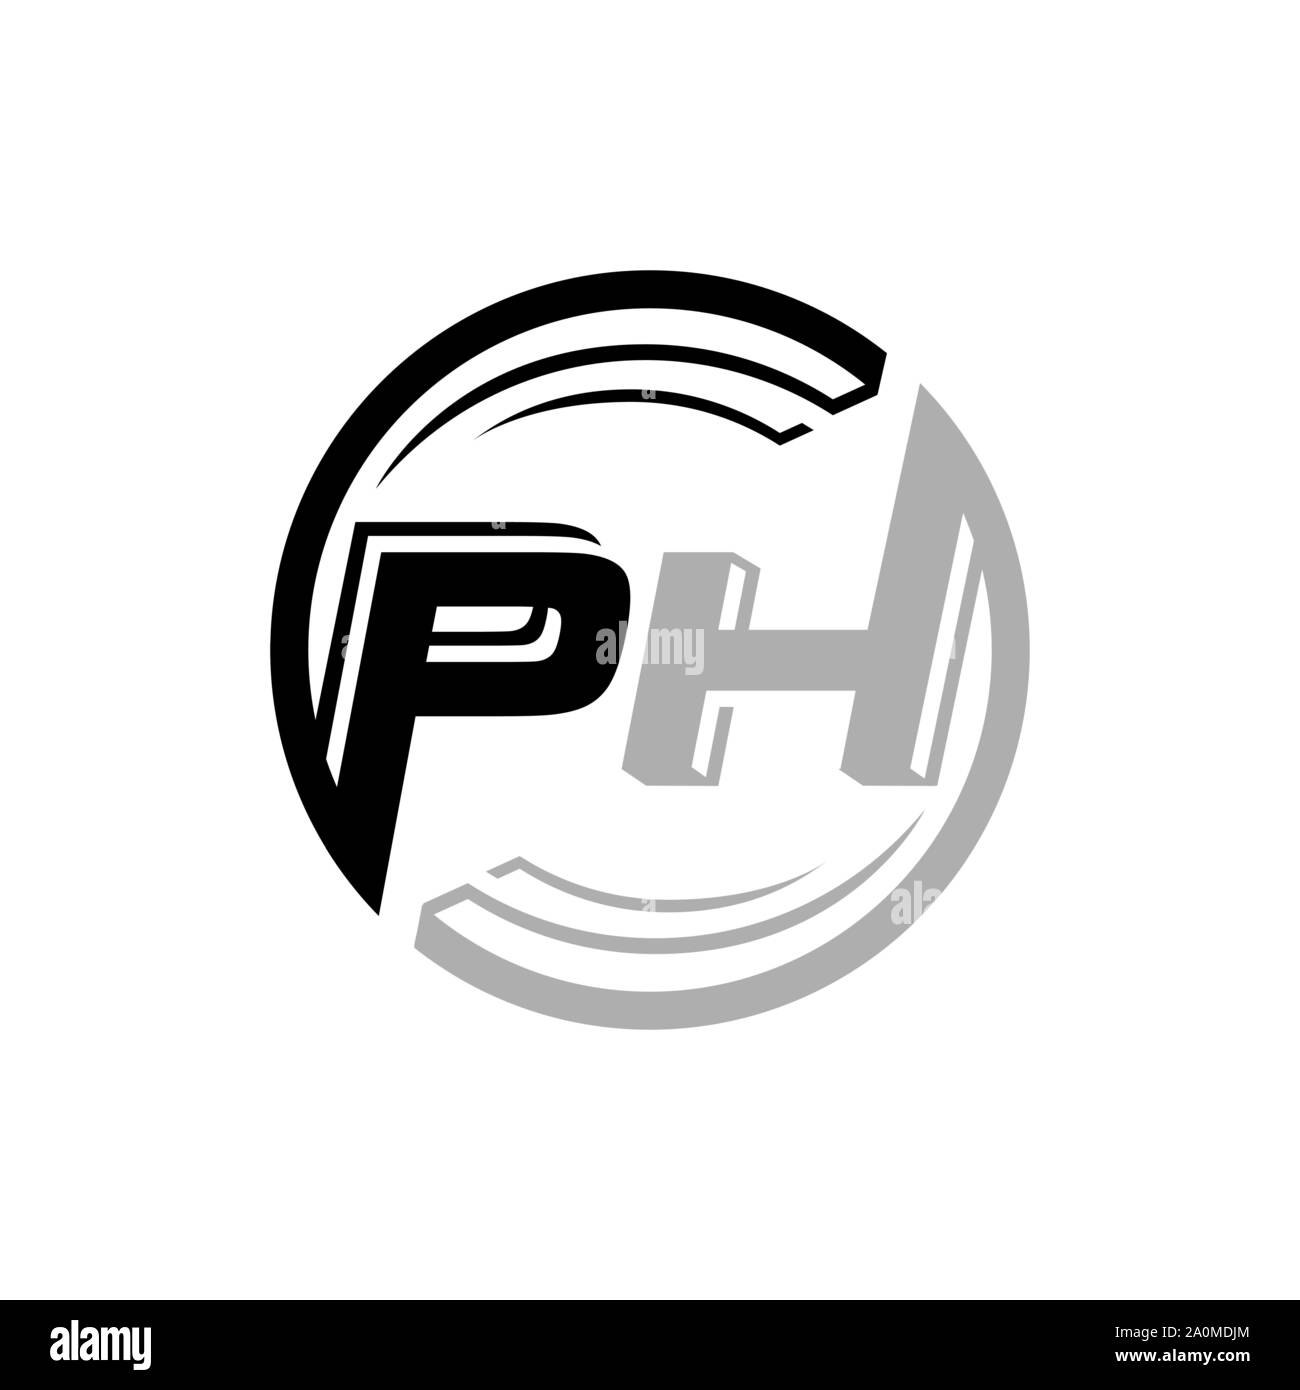 Ph logo Stock Vector Images - Alamy